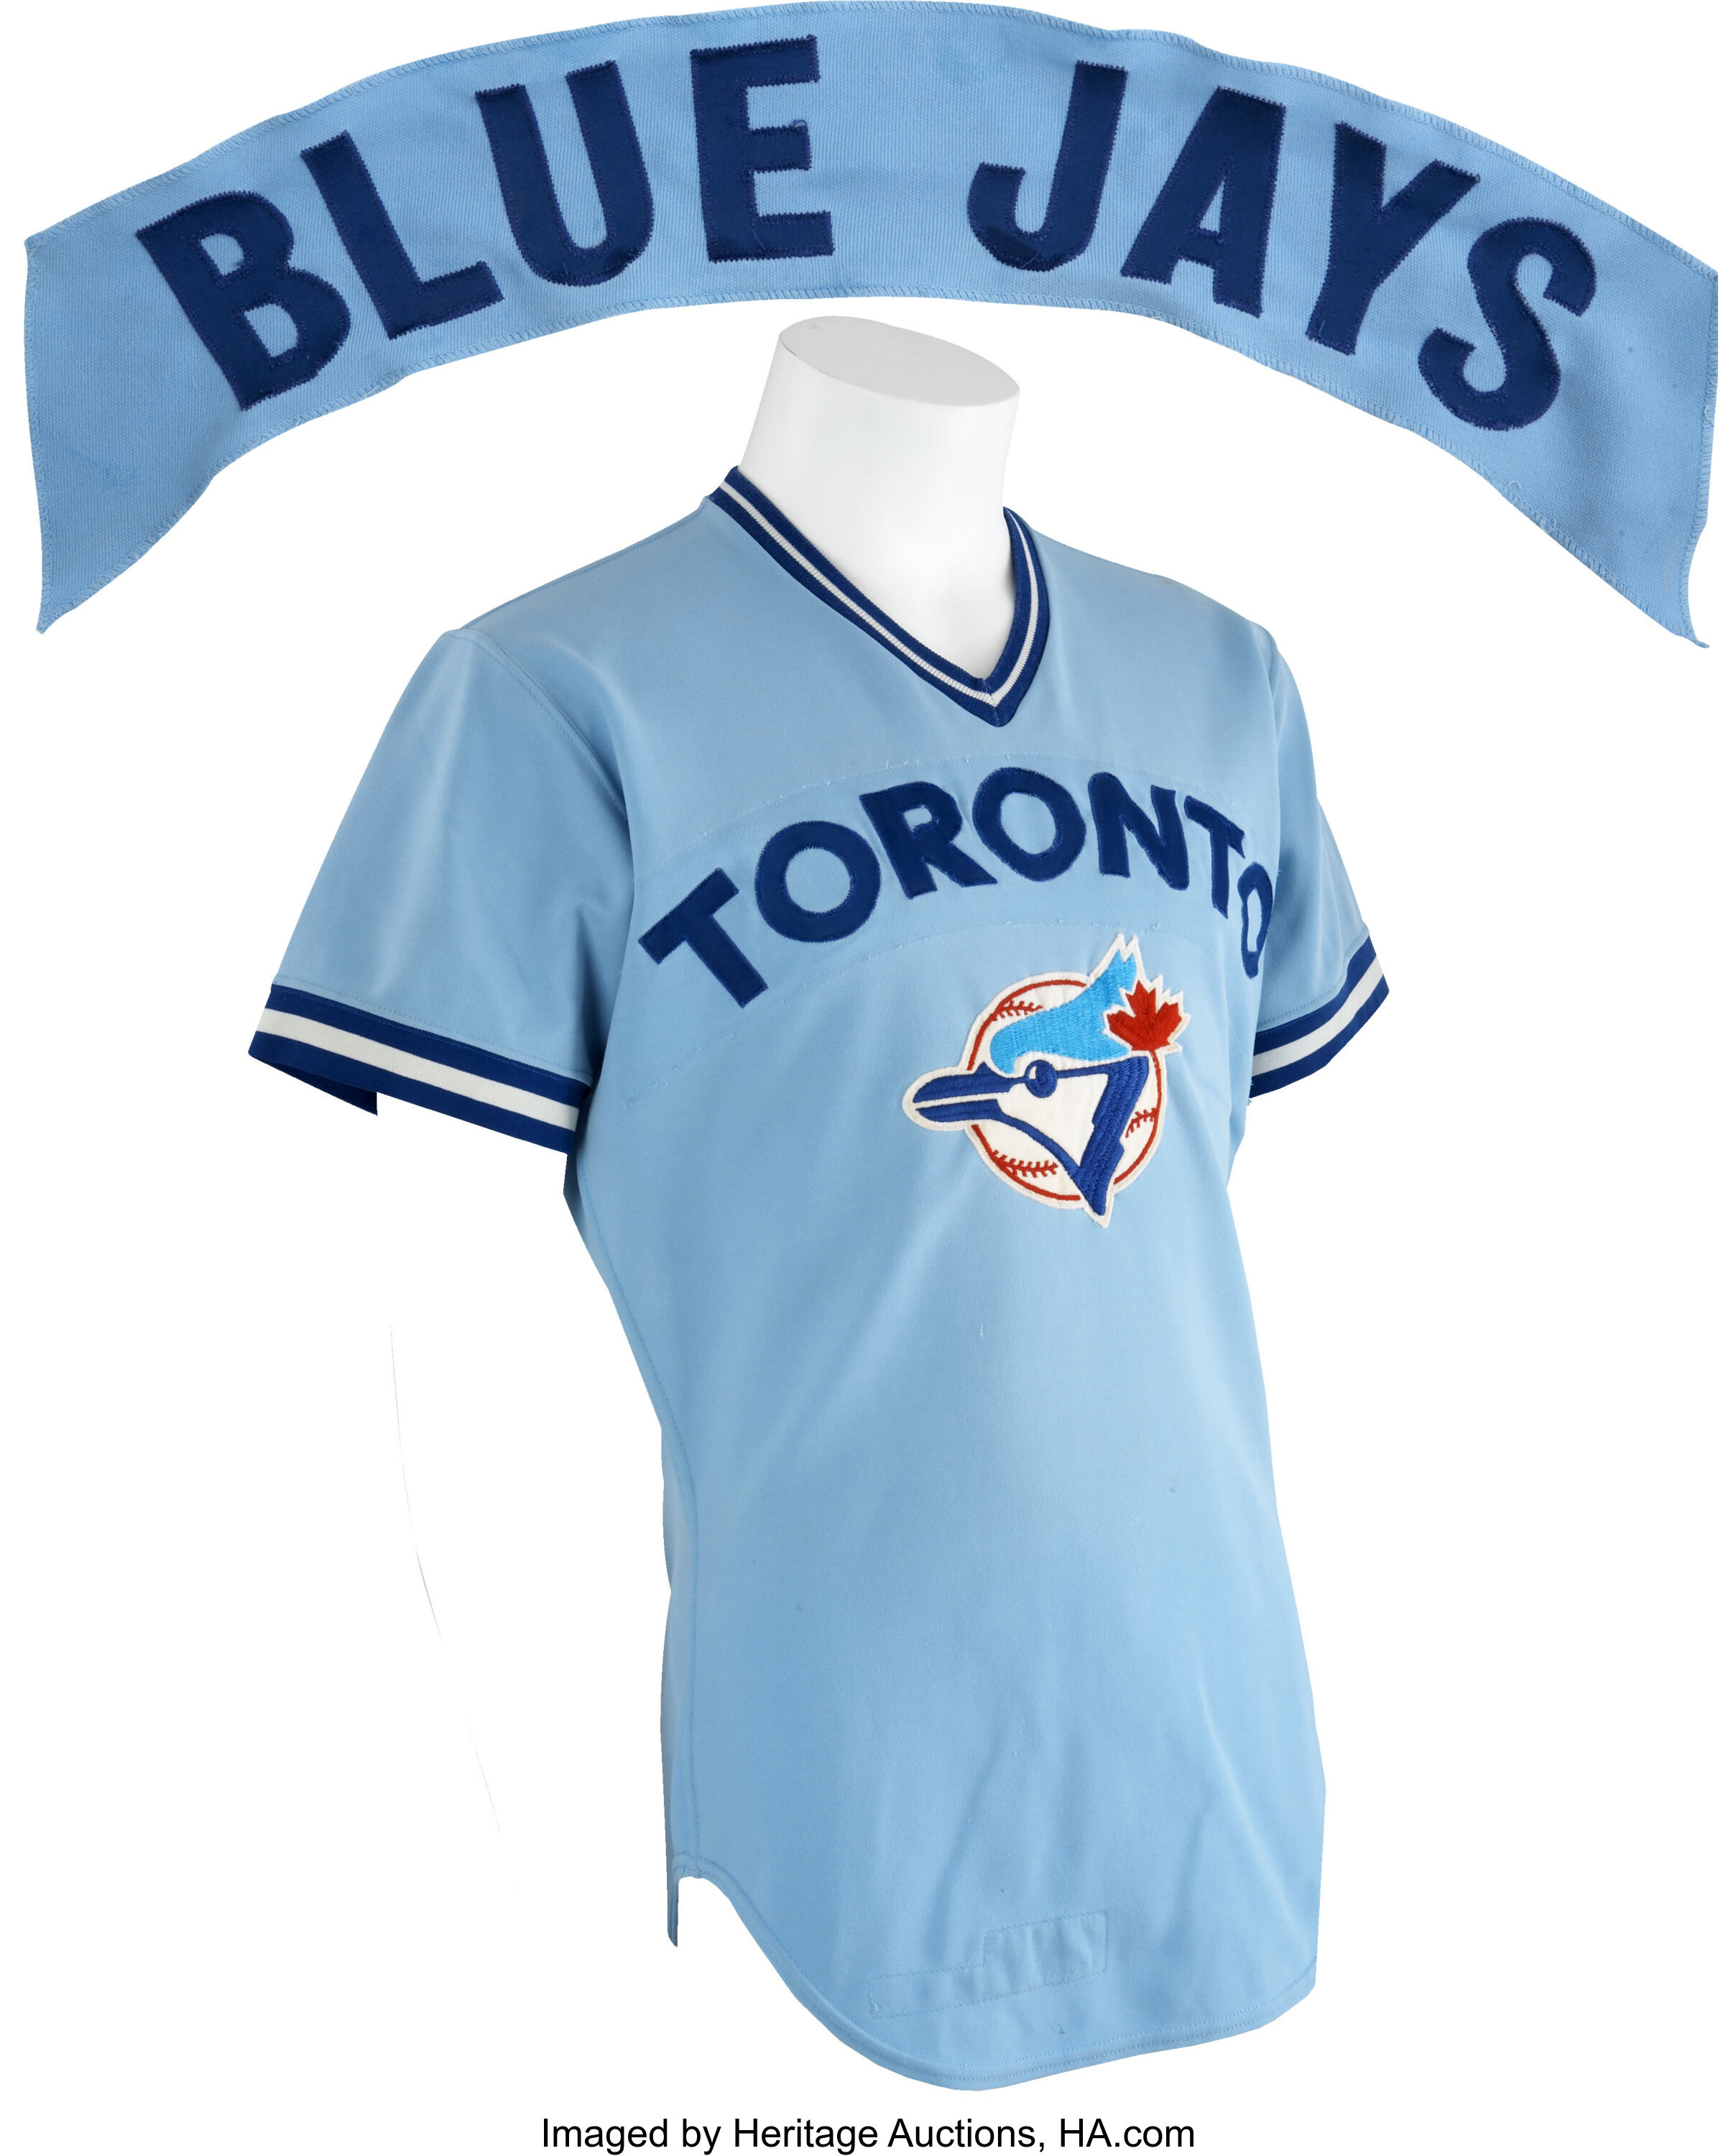 1977 Toronto Blue Jays Inaugural Season Game Worn Jersey Lot 19849 Heritage Auctions